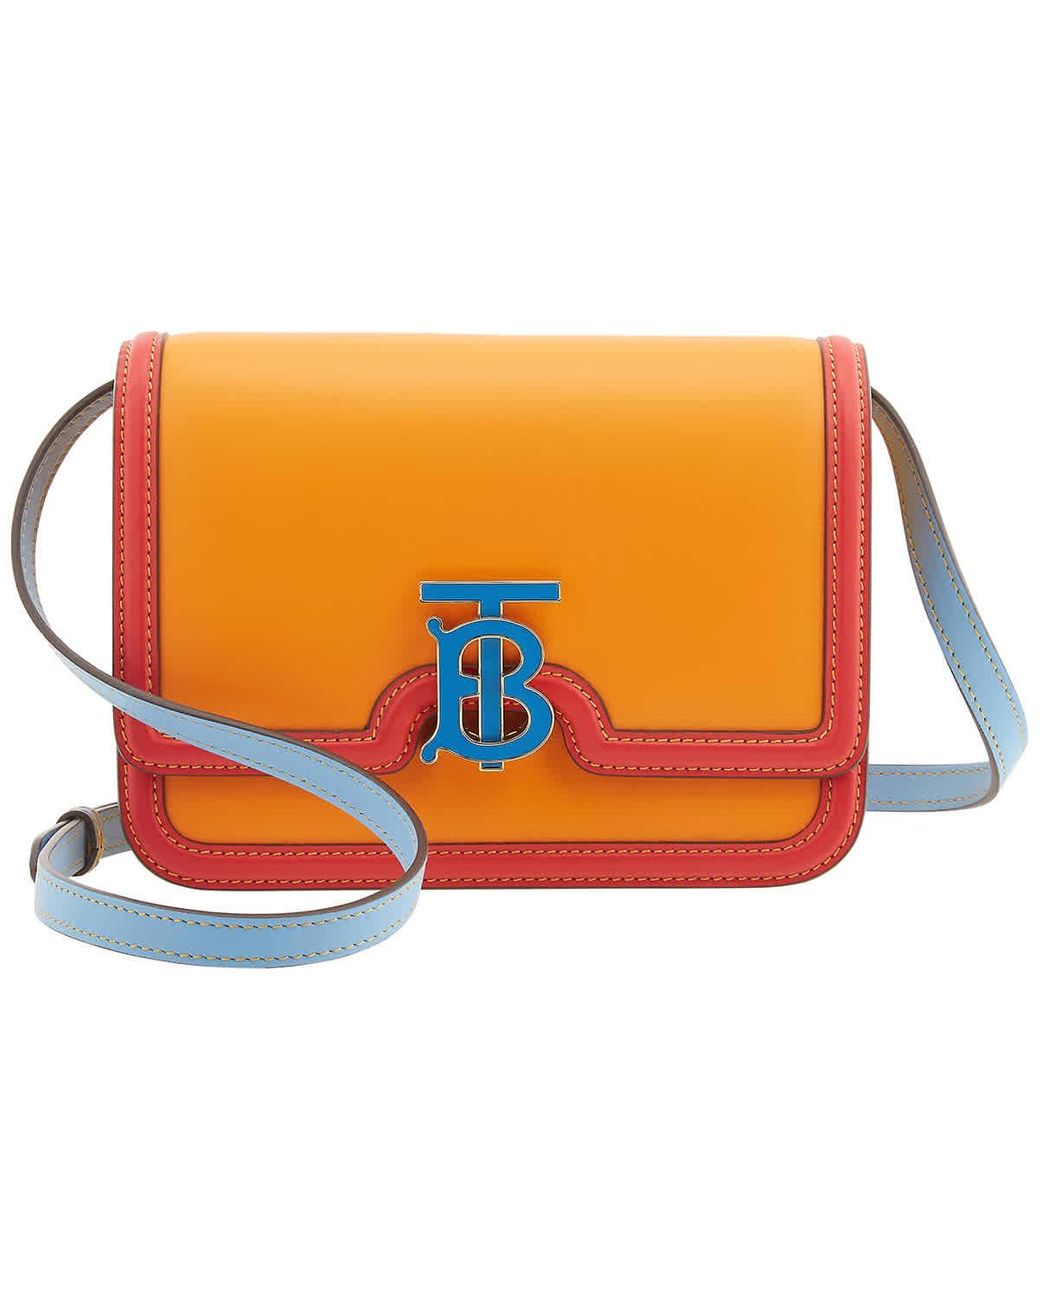 Burberry Deep Colorblock Leather Tb Monogram Shoulder Bag in Orange | Lyst